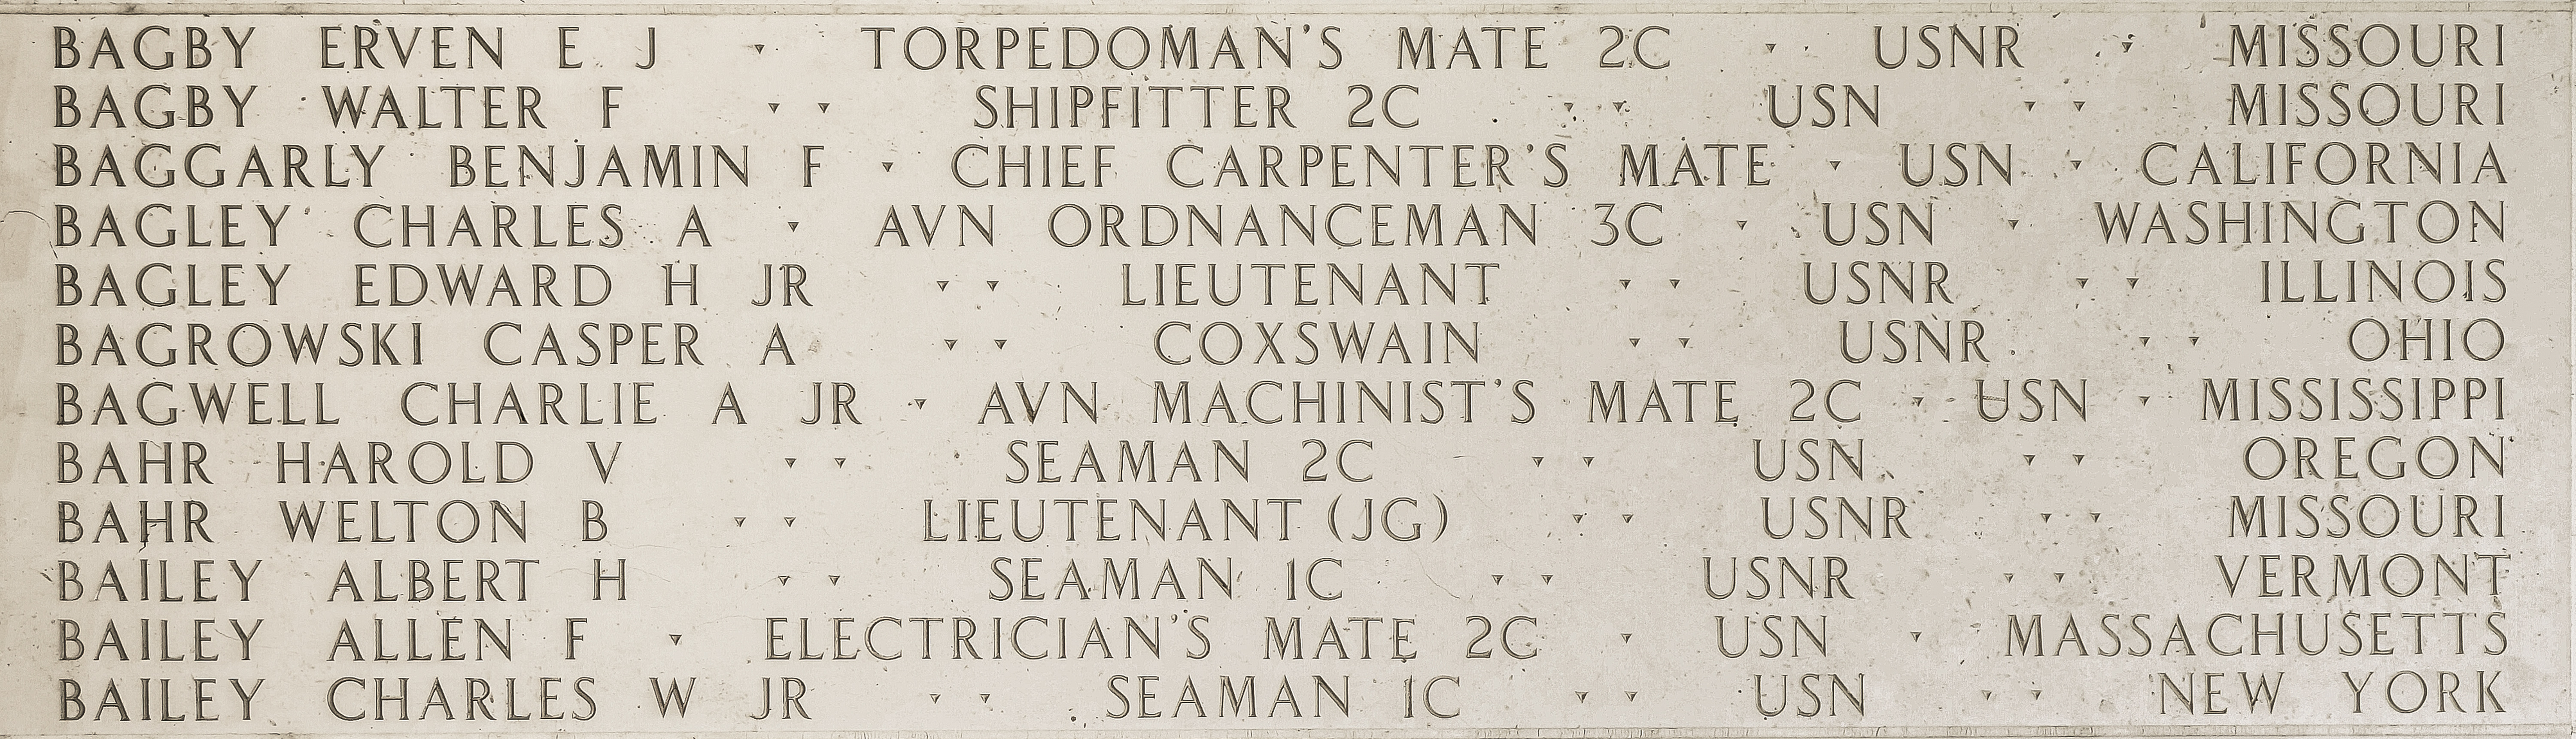 Erven E. J. Bagby, Torpedoman's Mate Second Class